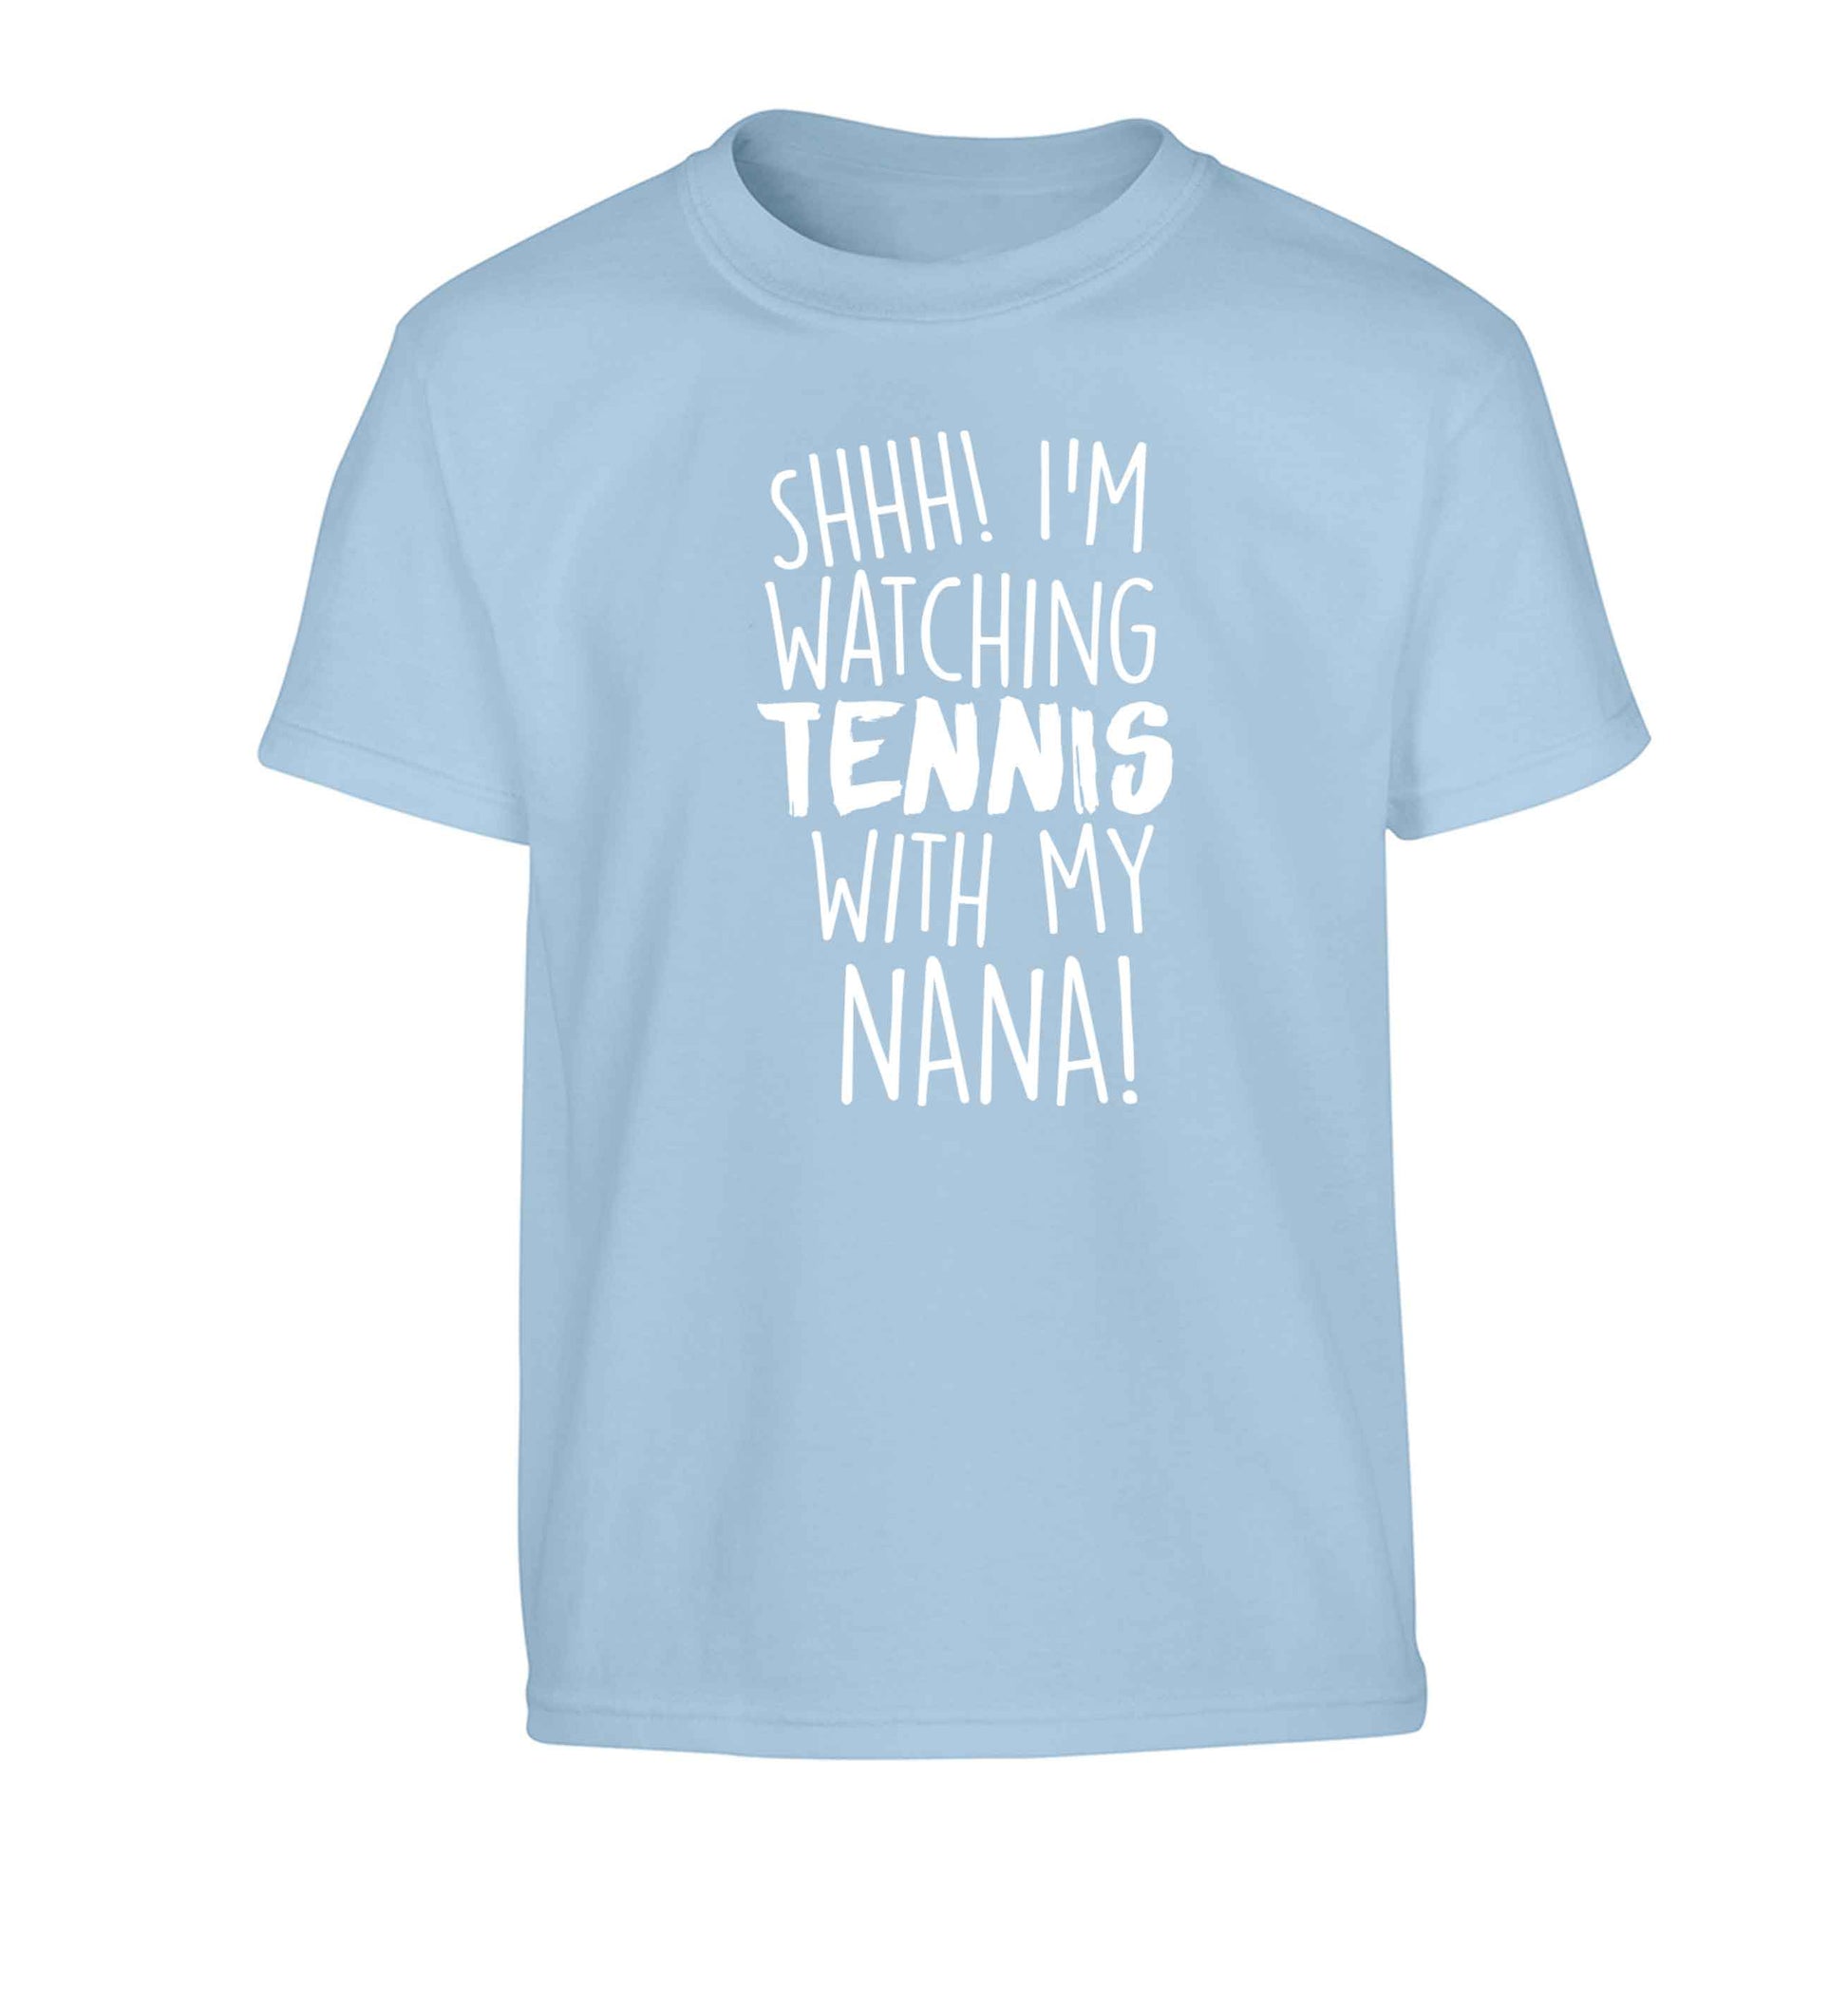 Shh! I'm watching tennis with my nana! Children's light blue Tshirt 12-13 Years